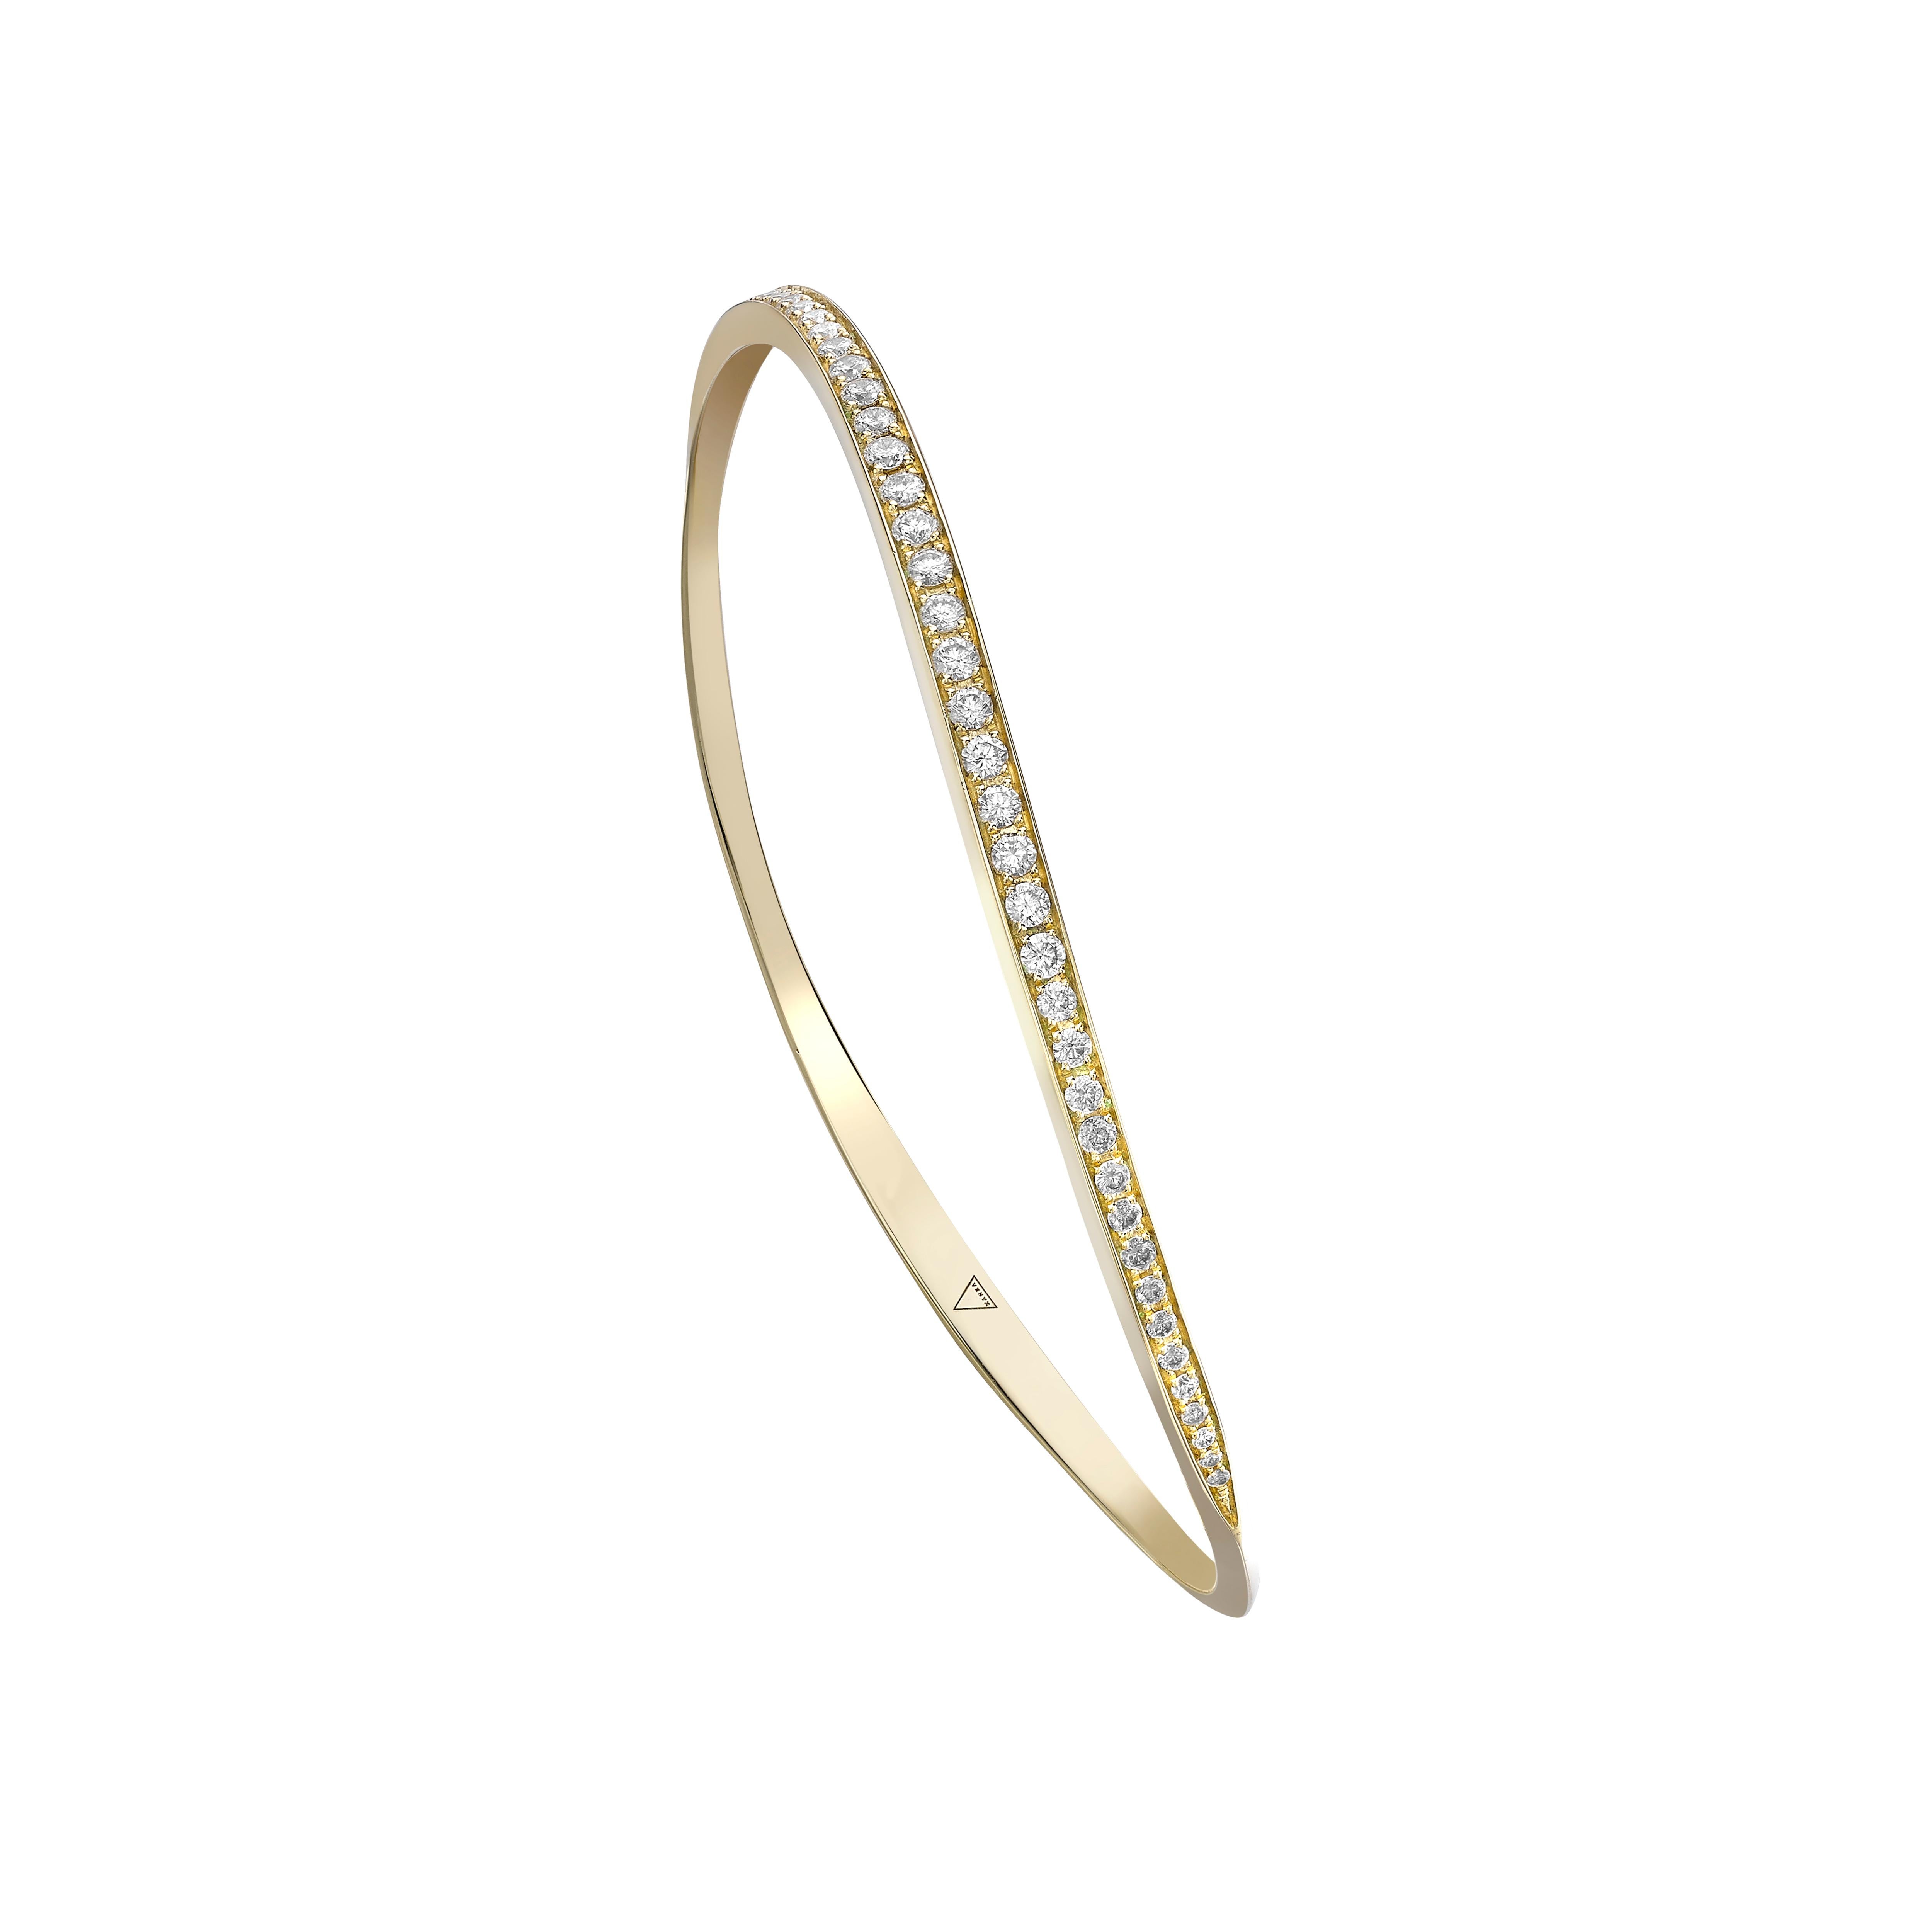 Venyx 18 Karat Yellow Gold and Diamond Orbit Bangle Bracelet (Zeitgenössisch)